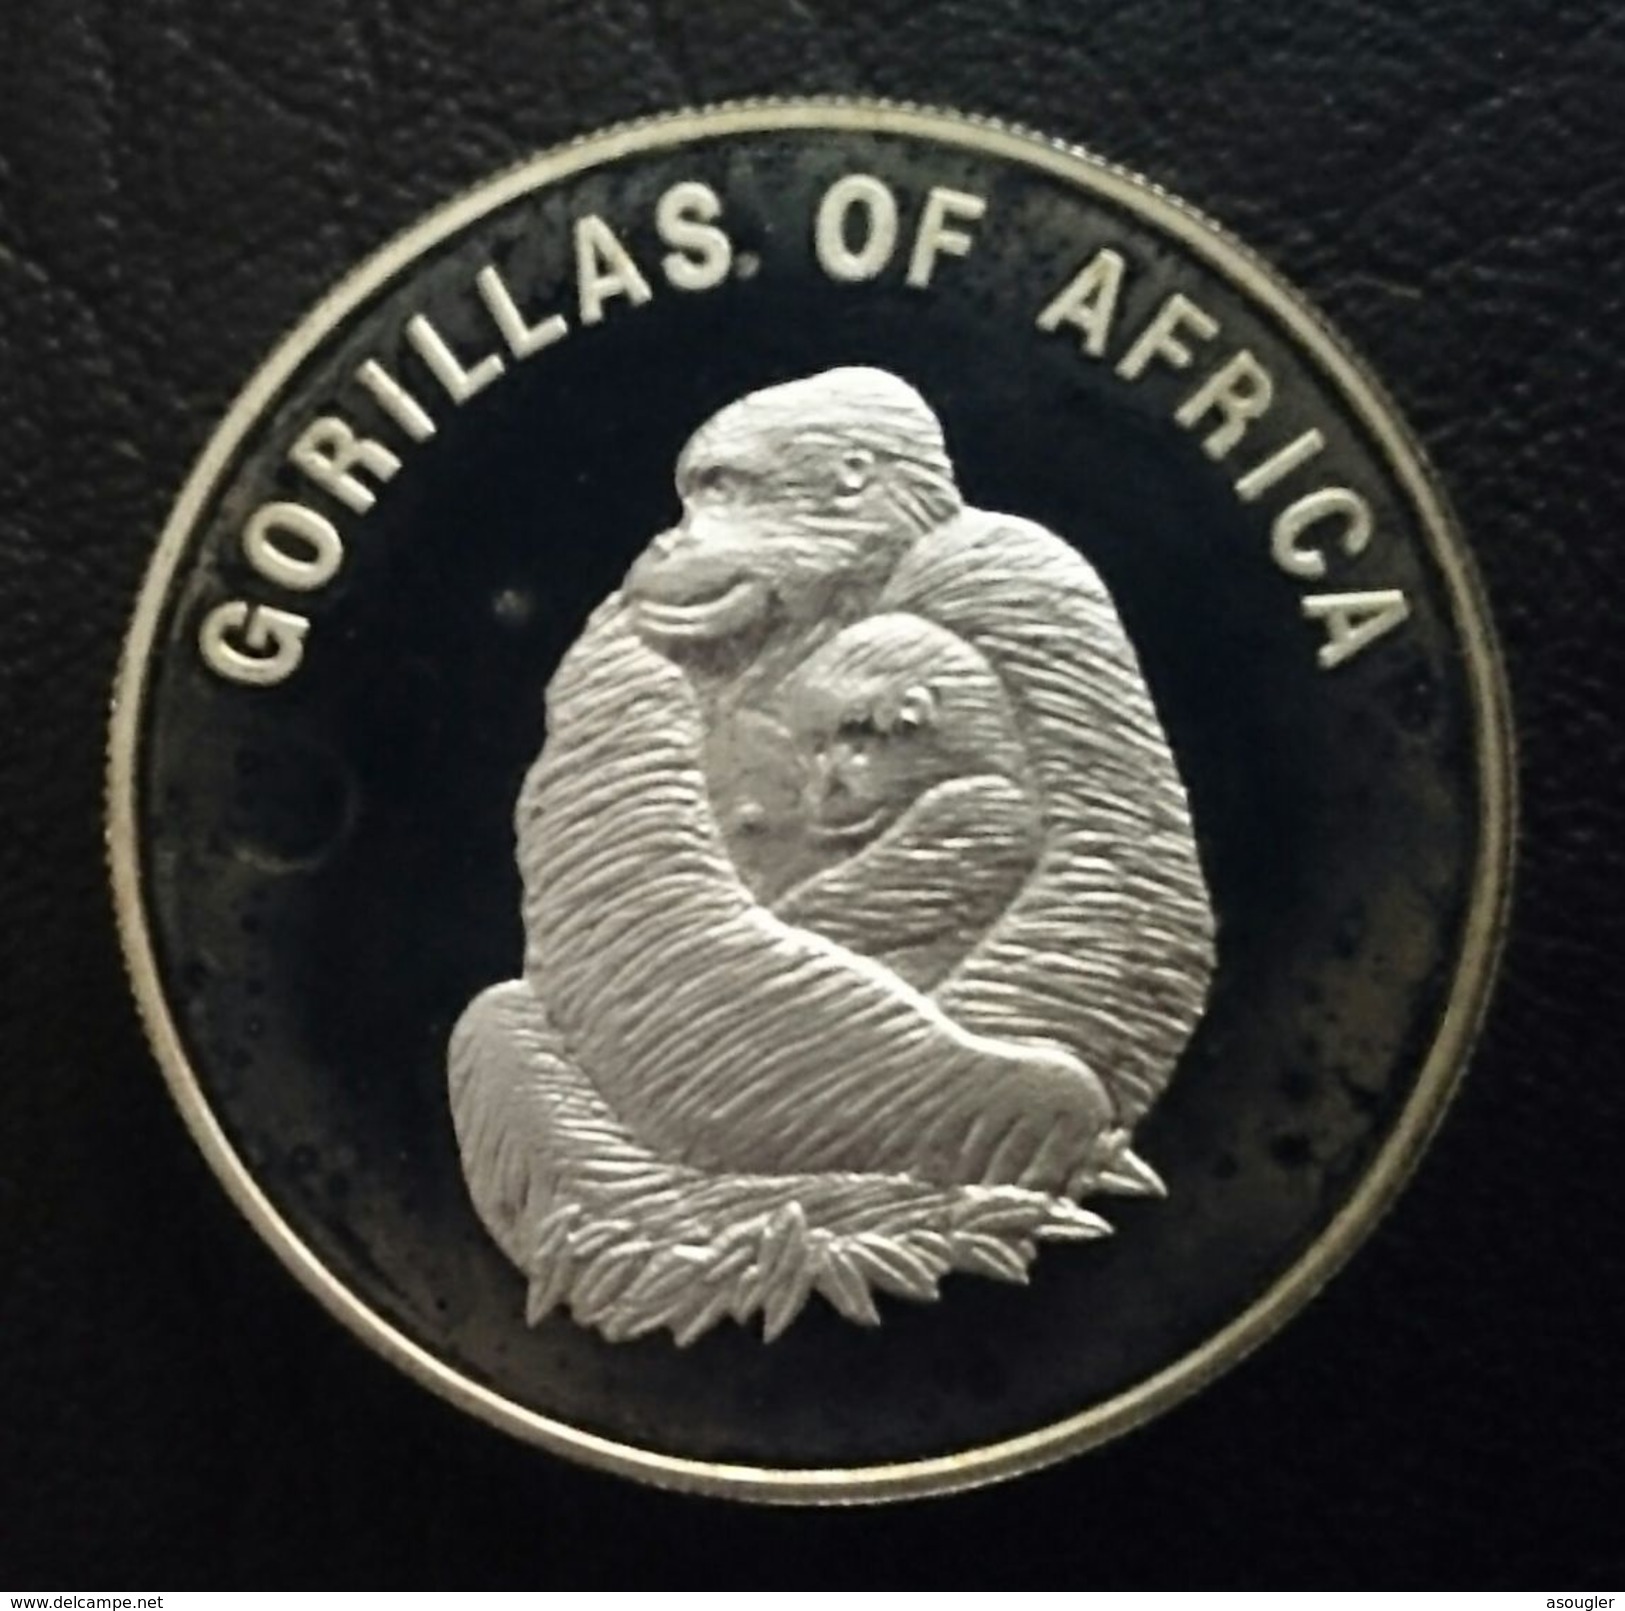 UGANDA 1000 SHILLINGS 2003 Silver Plated Bronze "Gorillas Of Africa" Free Shipping Via Registered Air Mail - Uganda